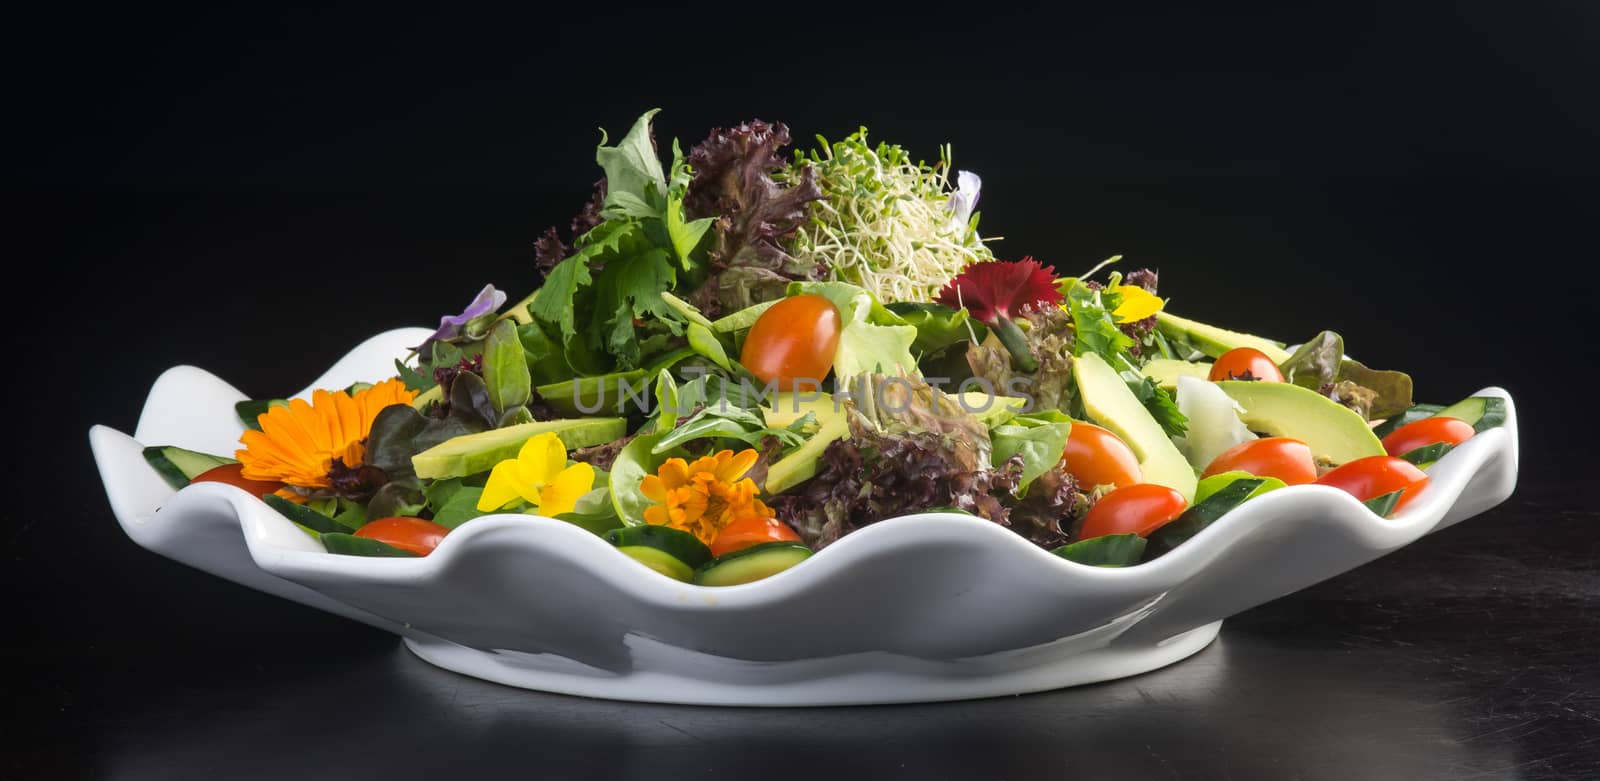 salad. salad on the background by heinteh